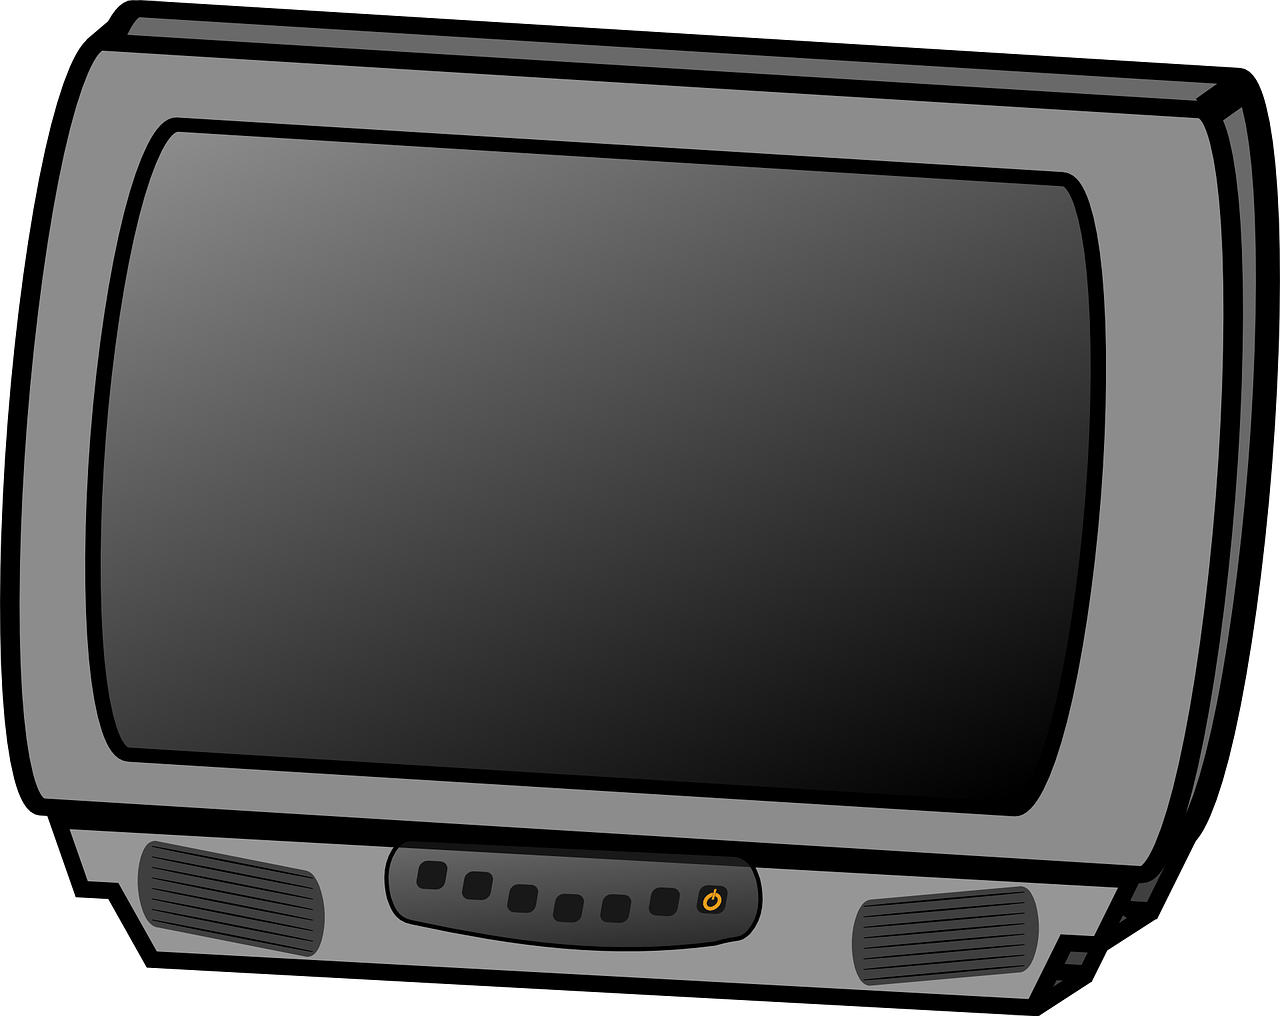 Картинка телевизор. Телевизор мультяшный. Телевизор для детей. Телевизор клипарт. Телевизор для дошкольников.